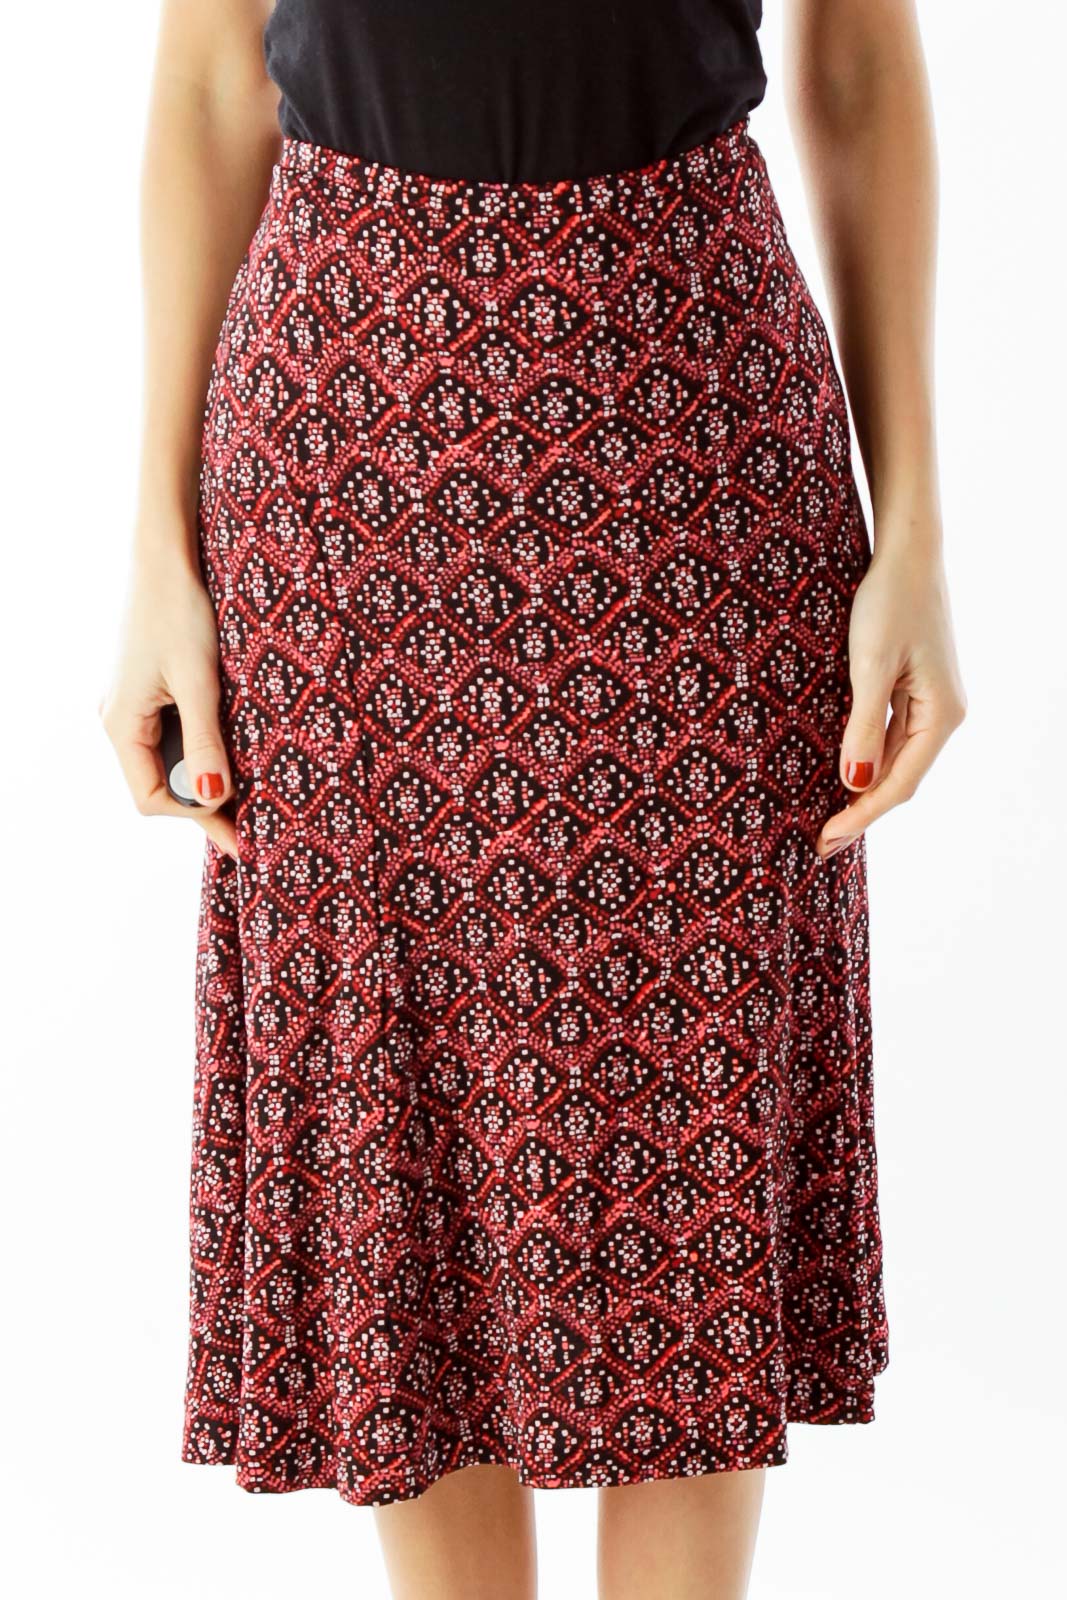 Red Black Geometric Print Flared Skirt Front